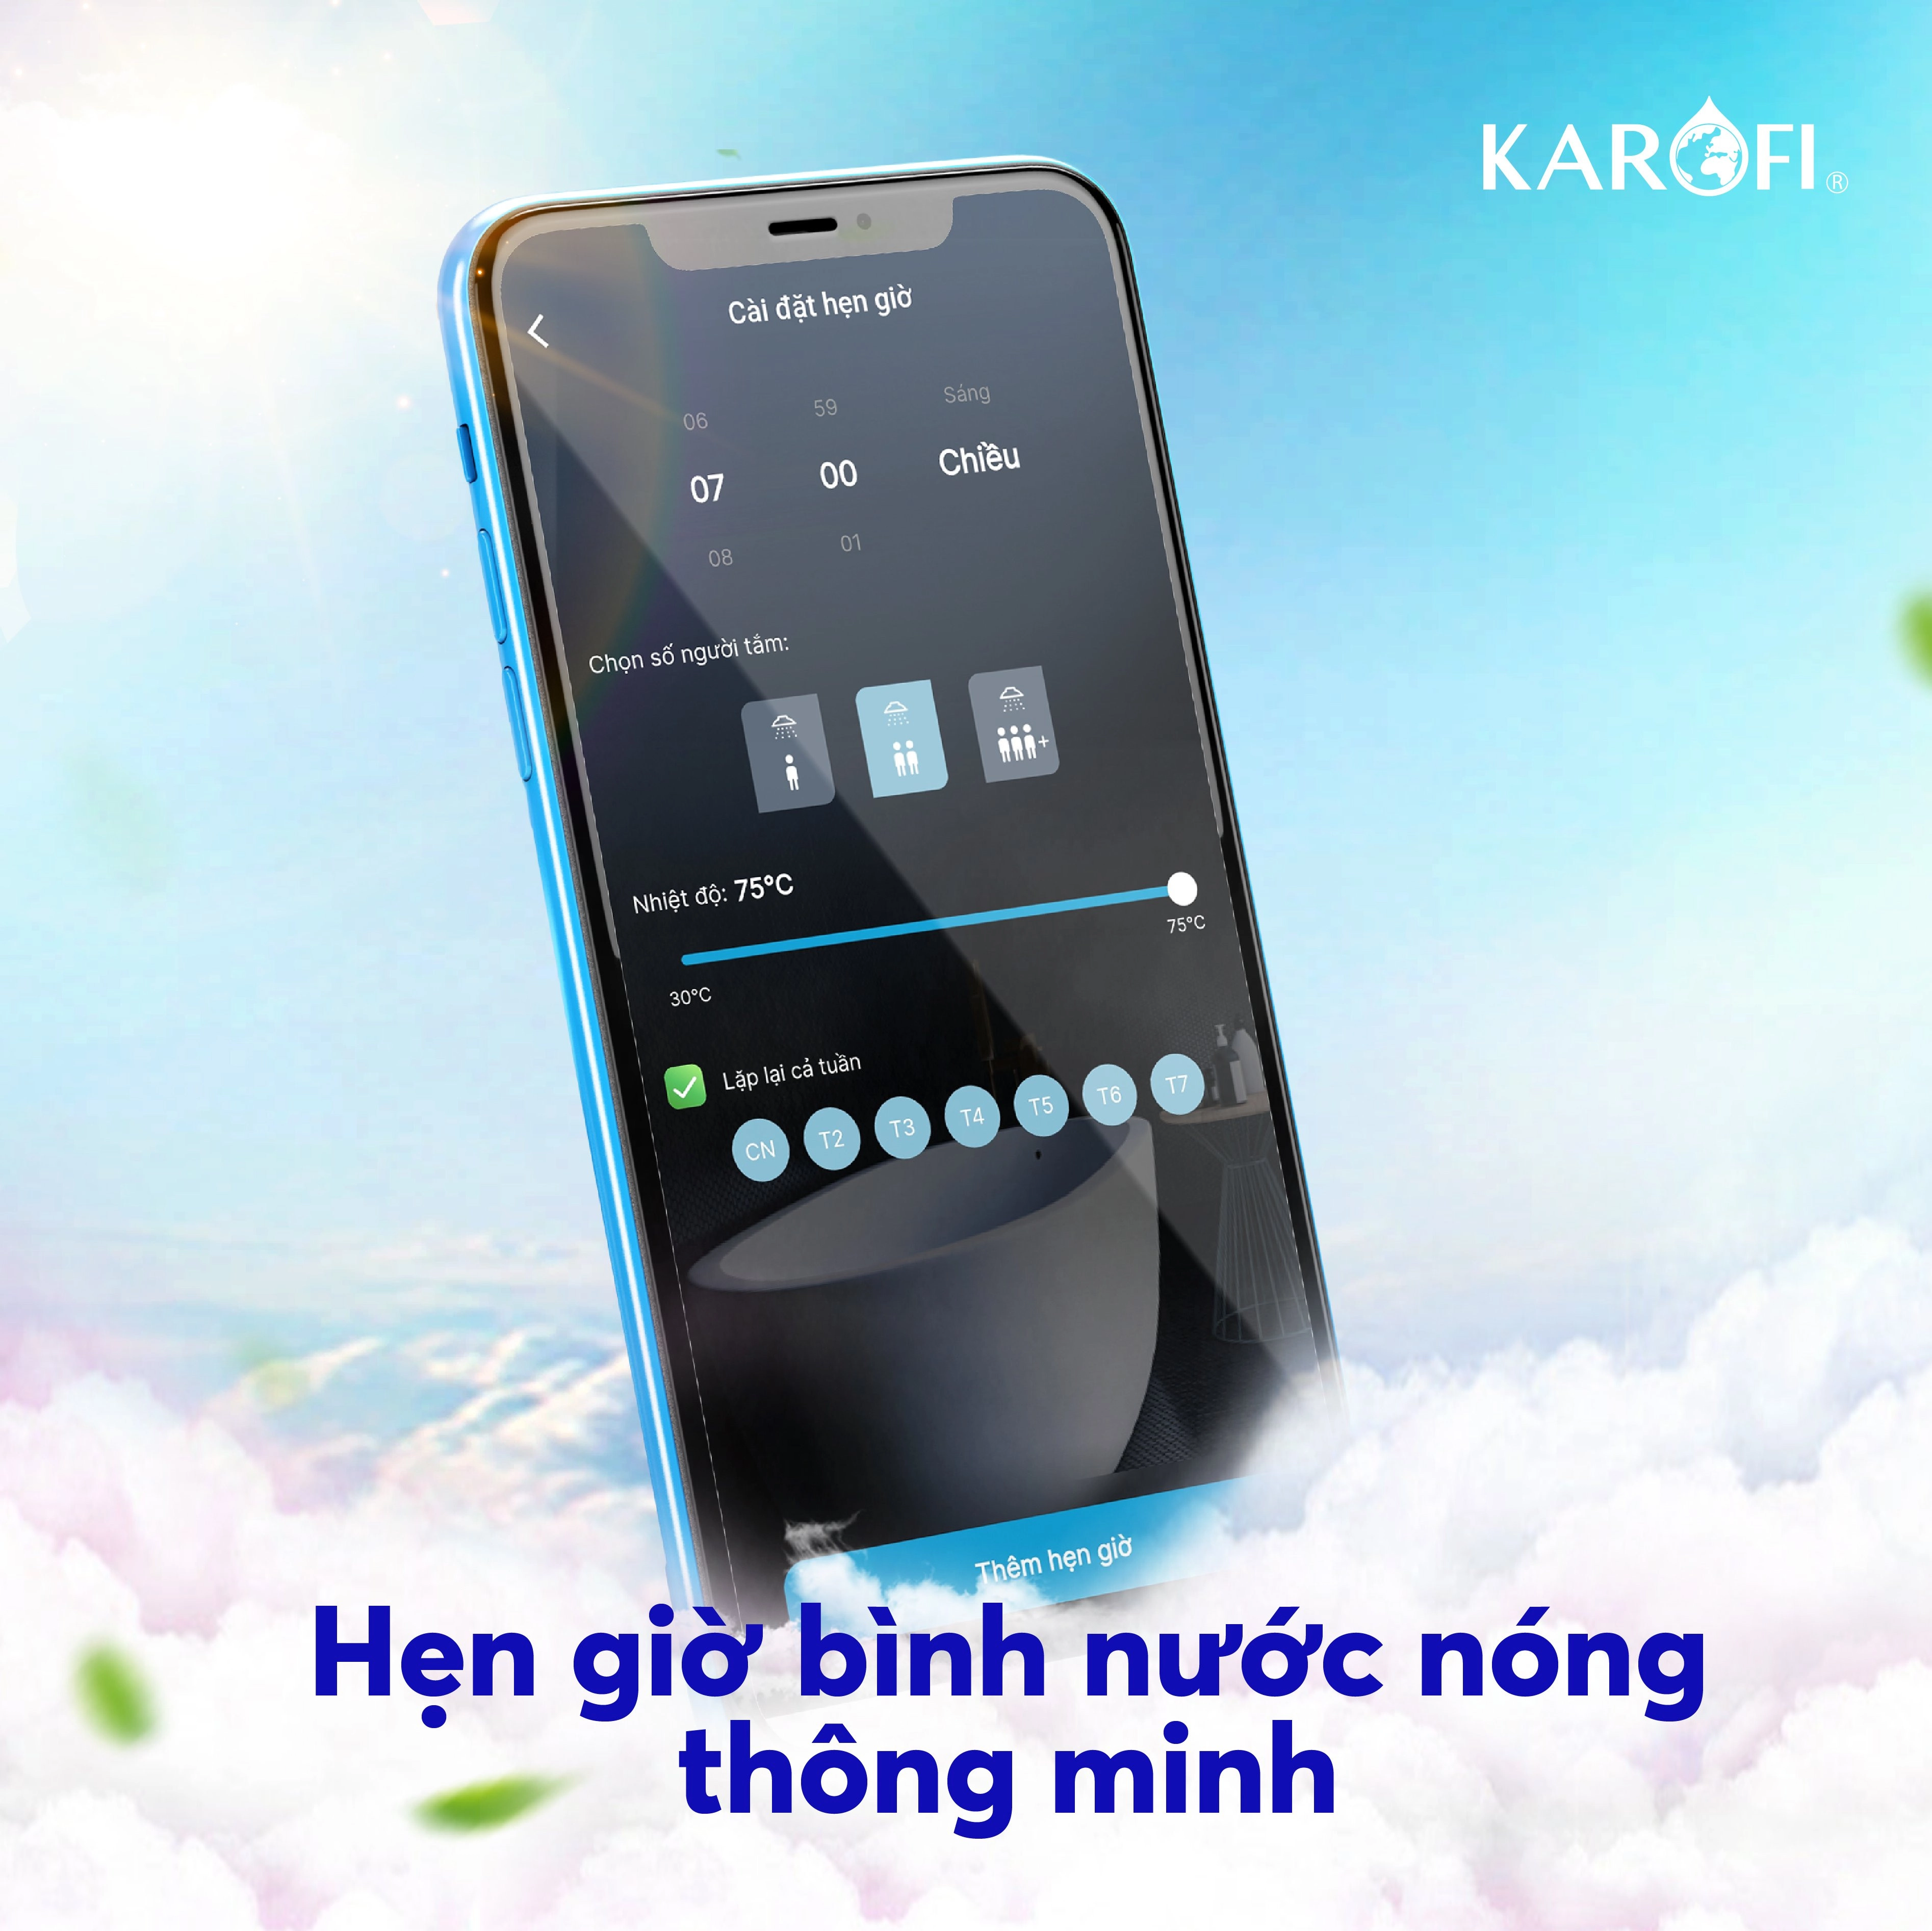 an-tam-song-khoe-kiem-soat-chat-luong-nuoc-va-khi-tren-app-karofi-365-thong-minh-6